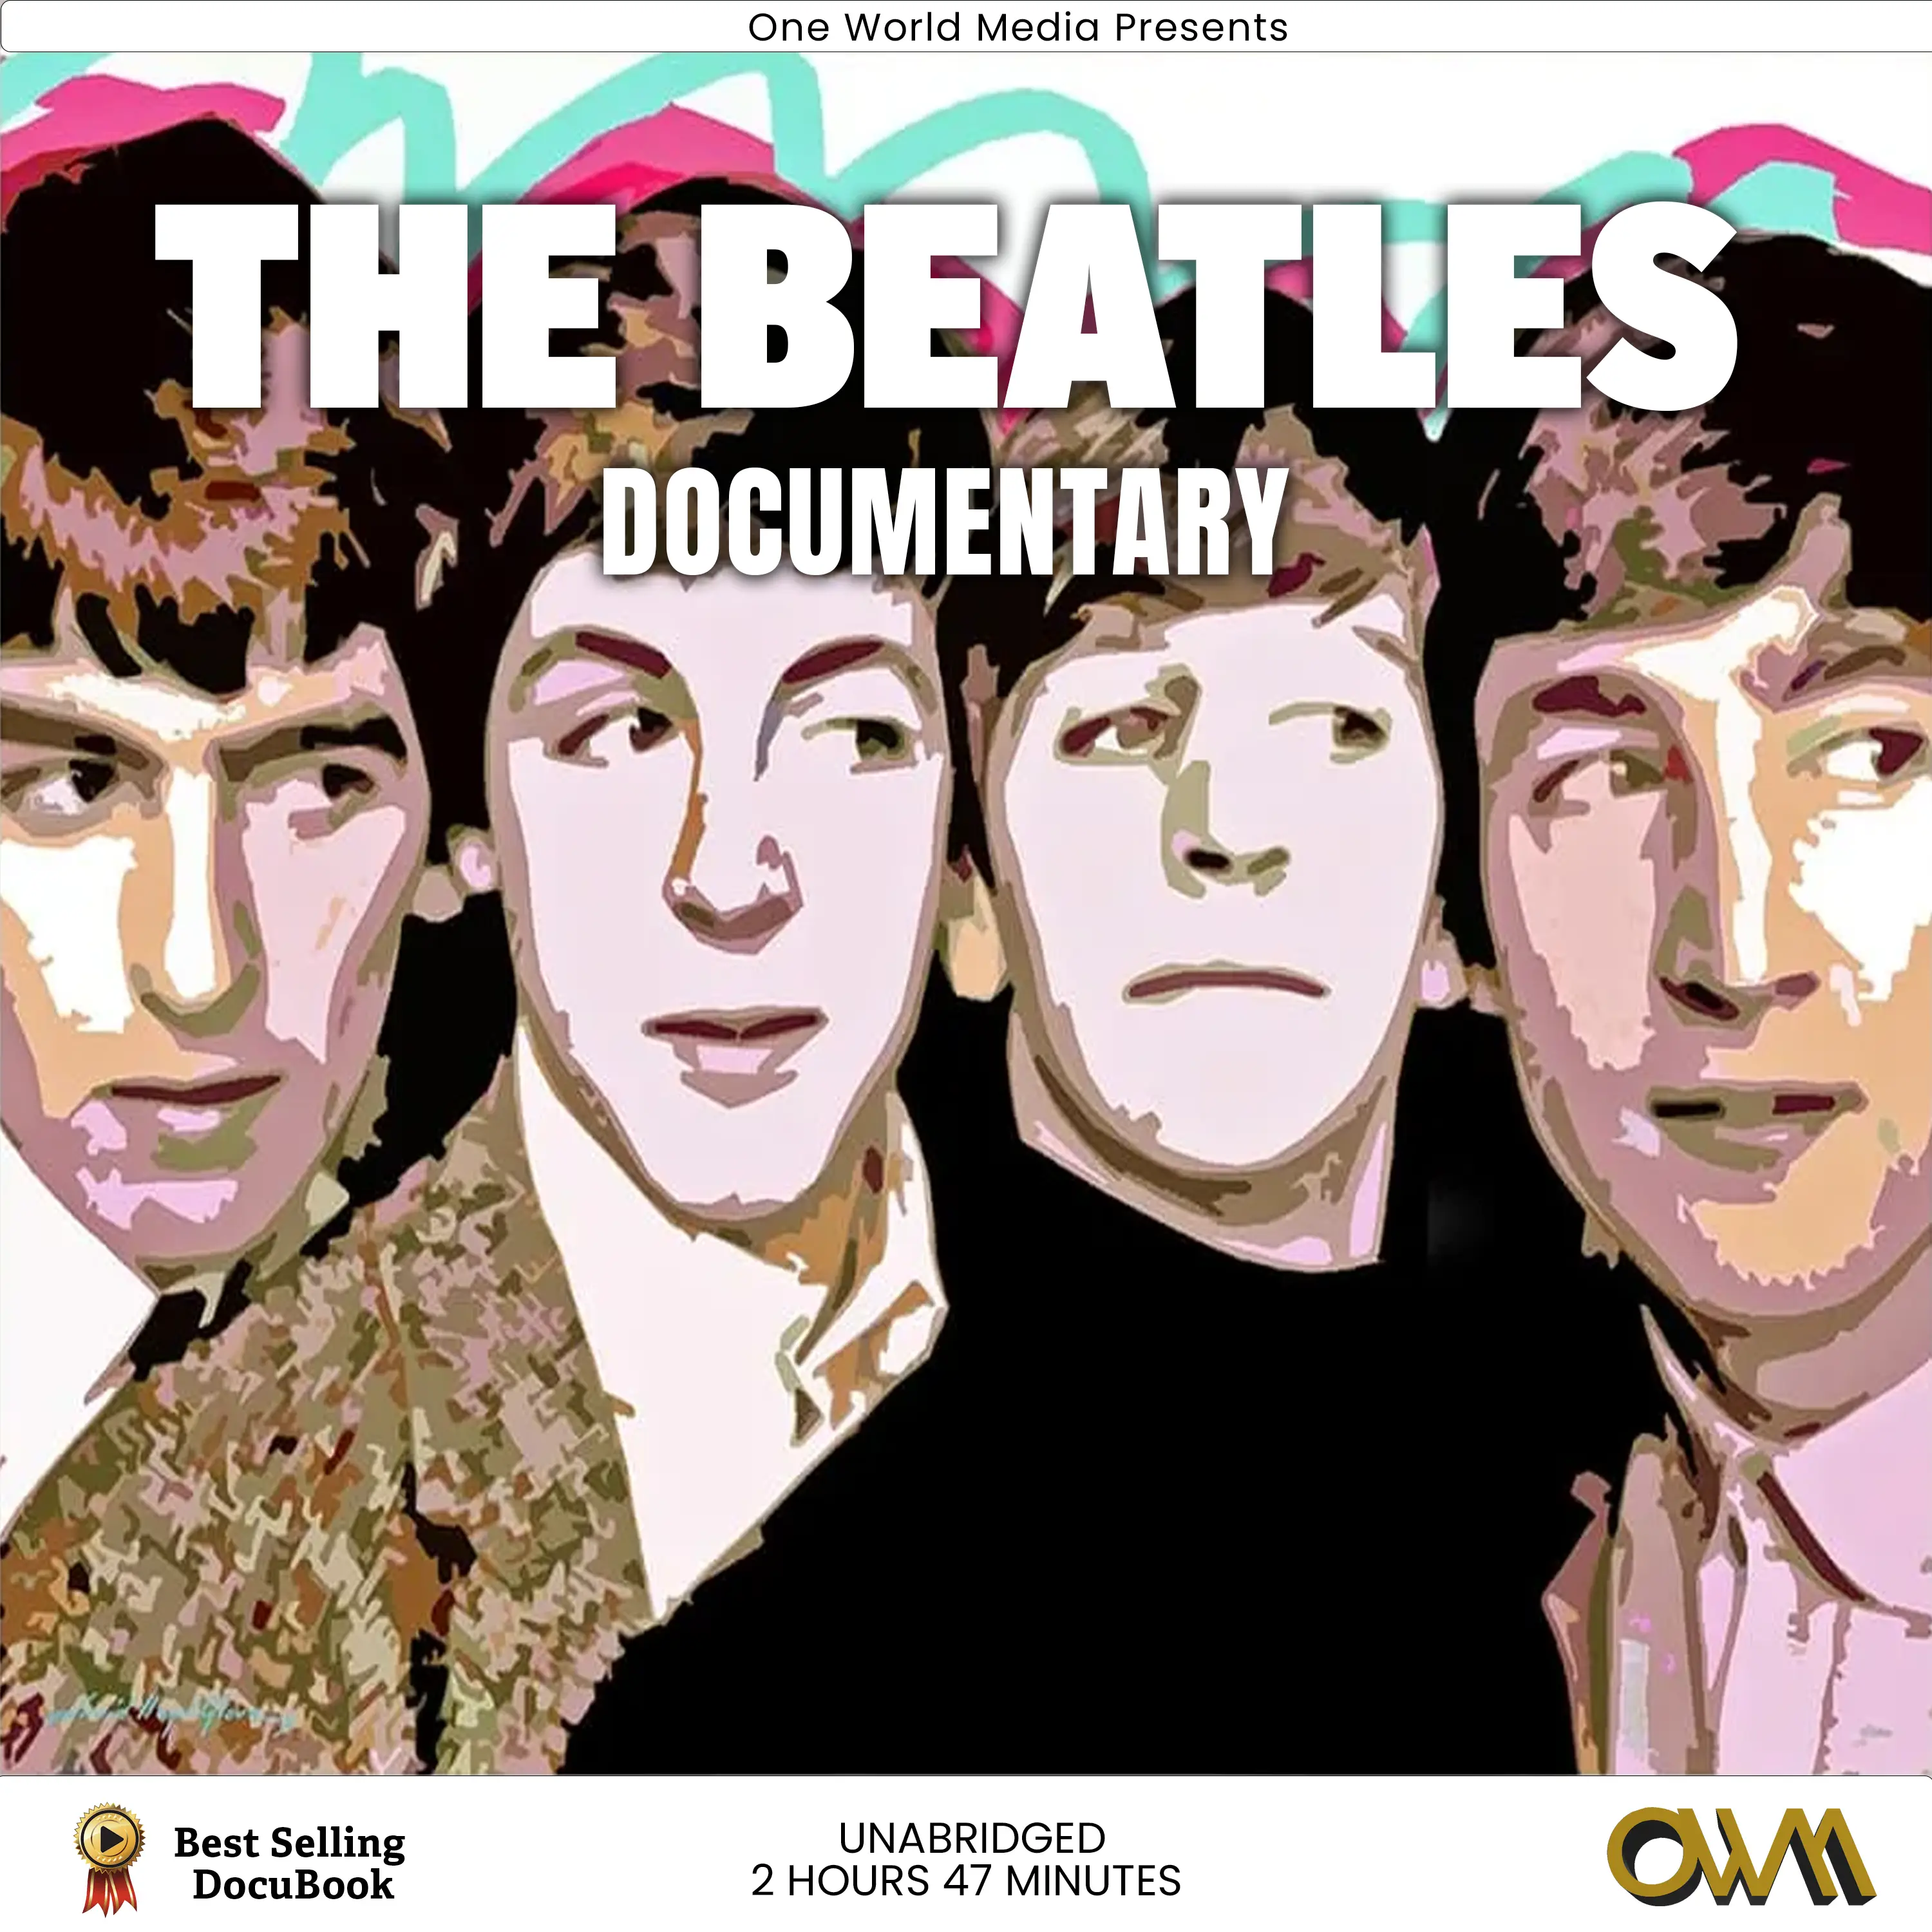 The Beatles - Documentary by Stefan Rudnicki